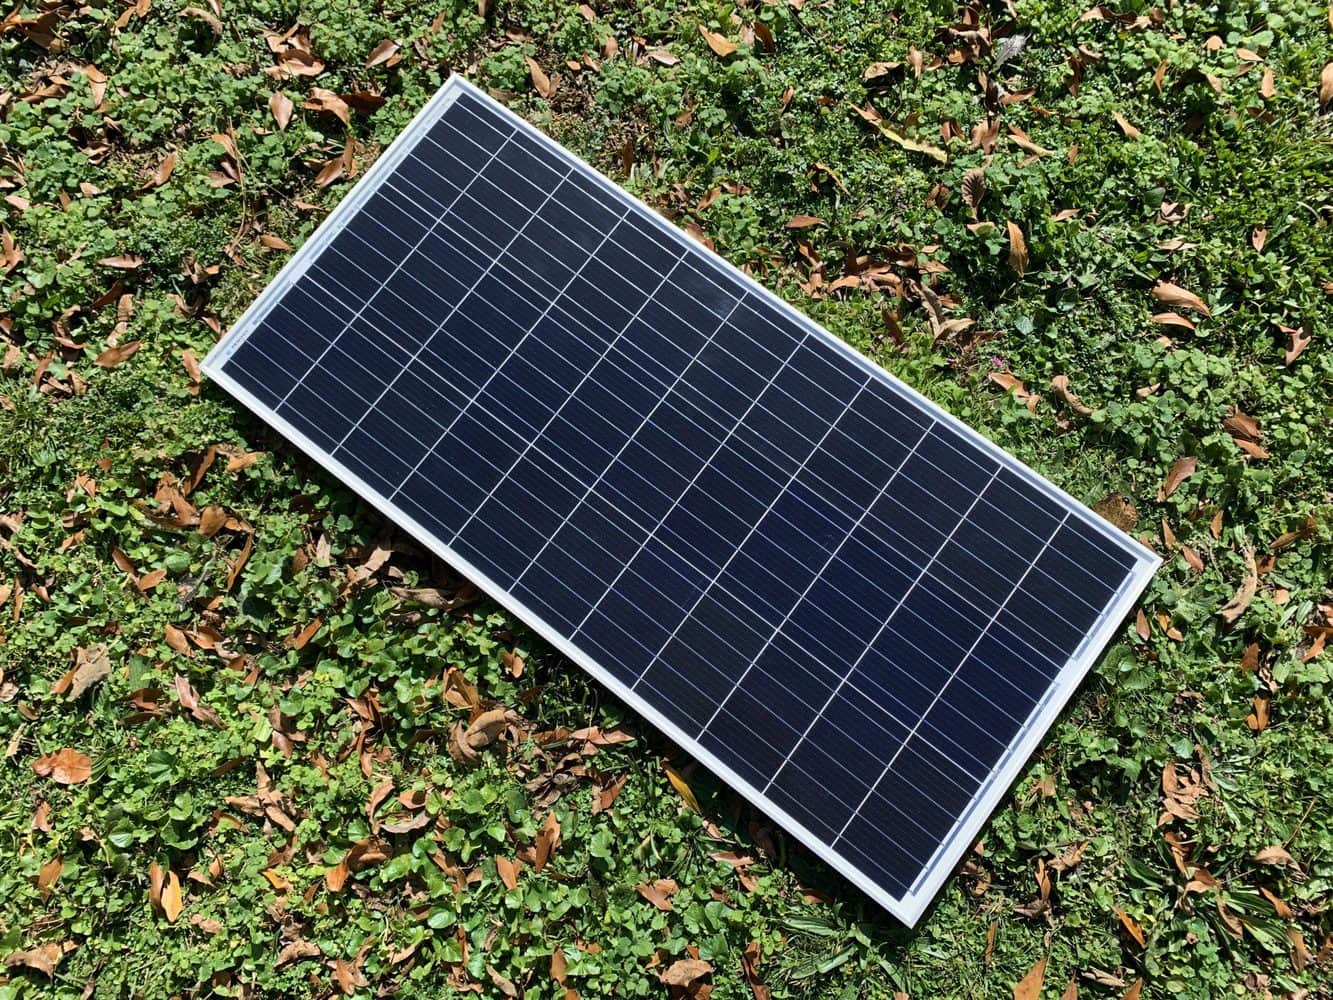 Topsolar Solar Panel Kit 100 Watt 12 Volt Monocrystalline Off Grid System for Homes RV Boat + 20A 12V/24V Solar Charge Controller + Solar Cables + Z-Brackets for Mounting - Shopwise